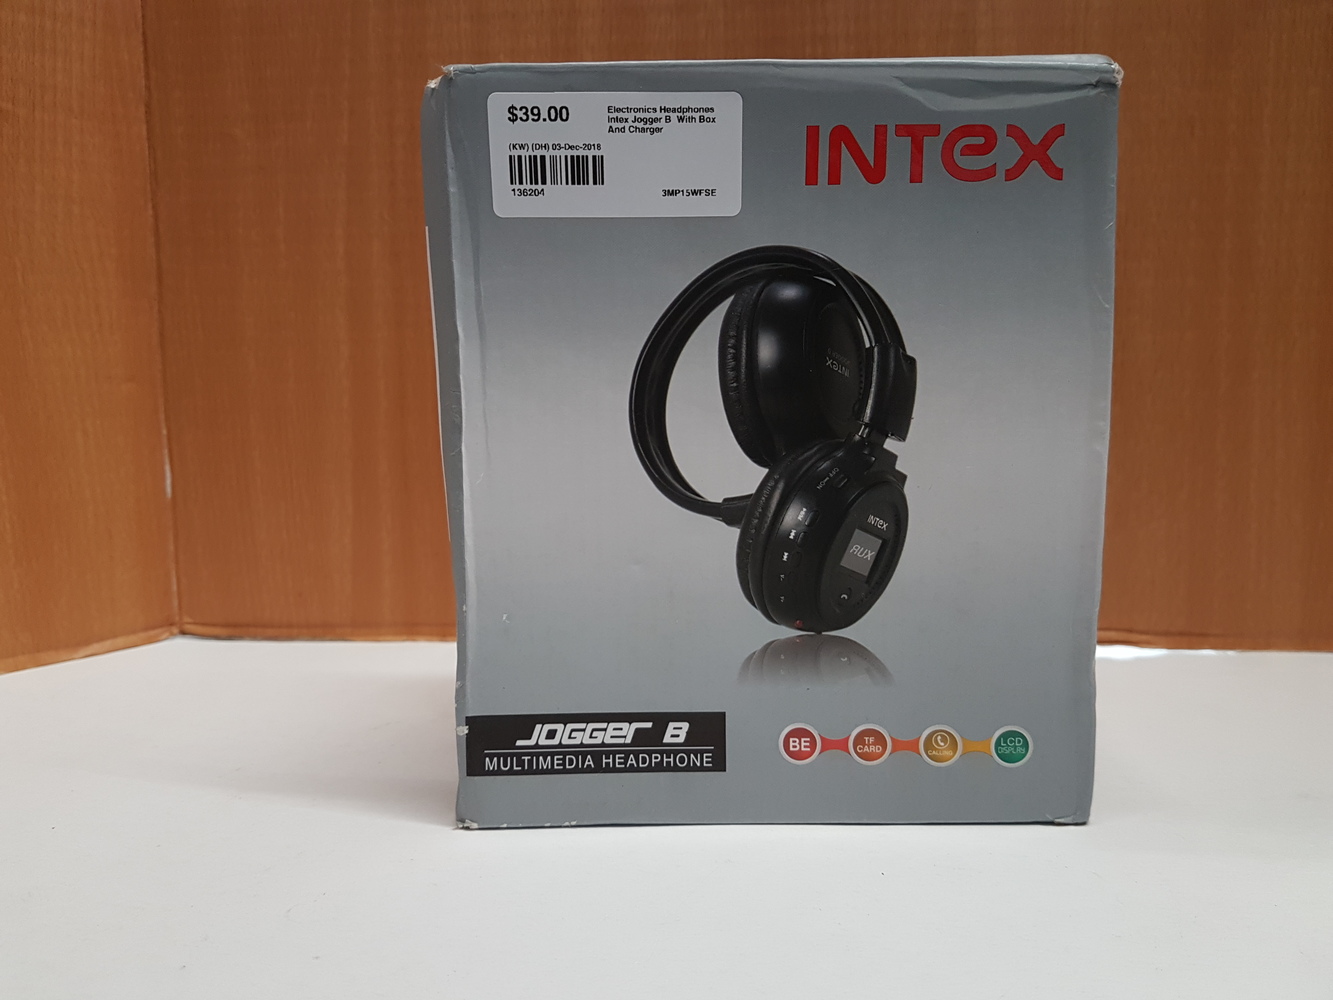 Intex Jogger B Multimedia Bluetooth Headphones